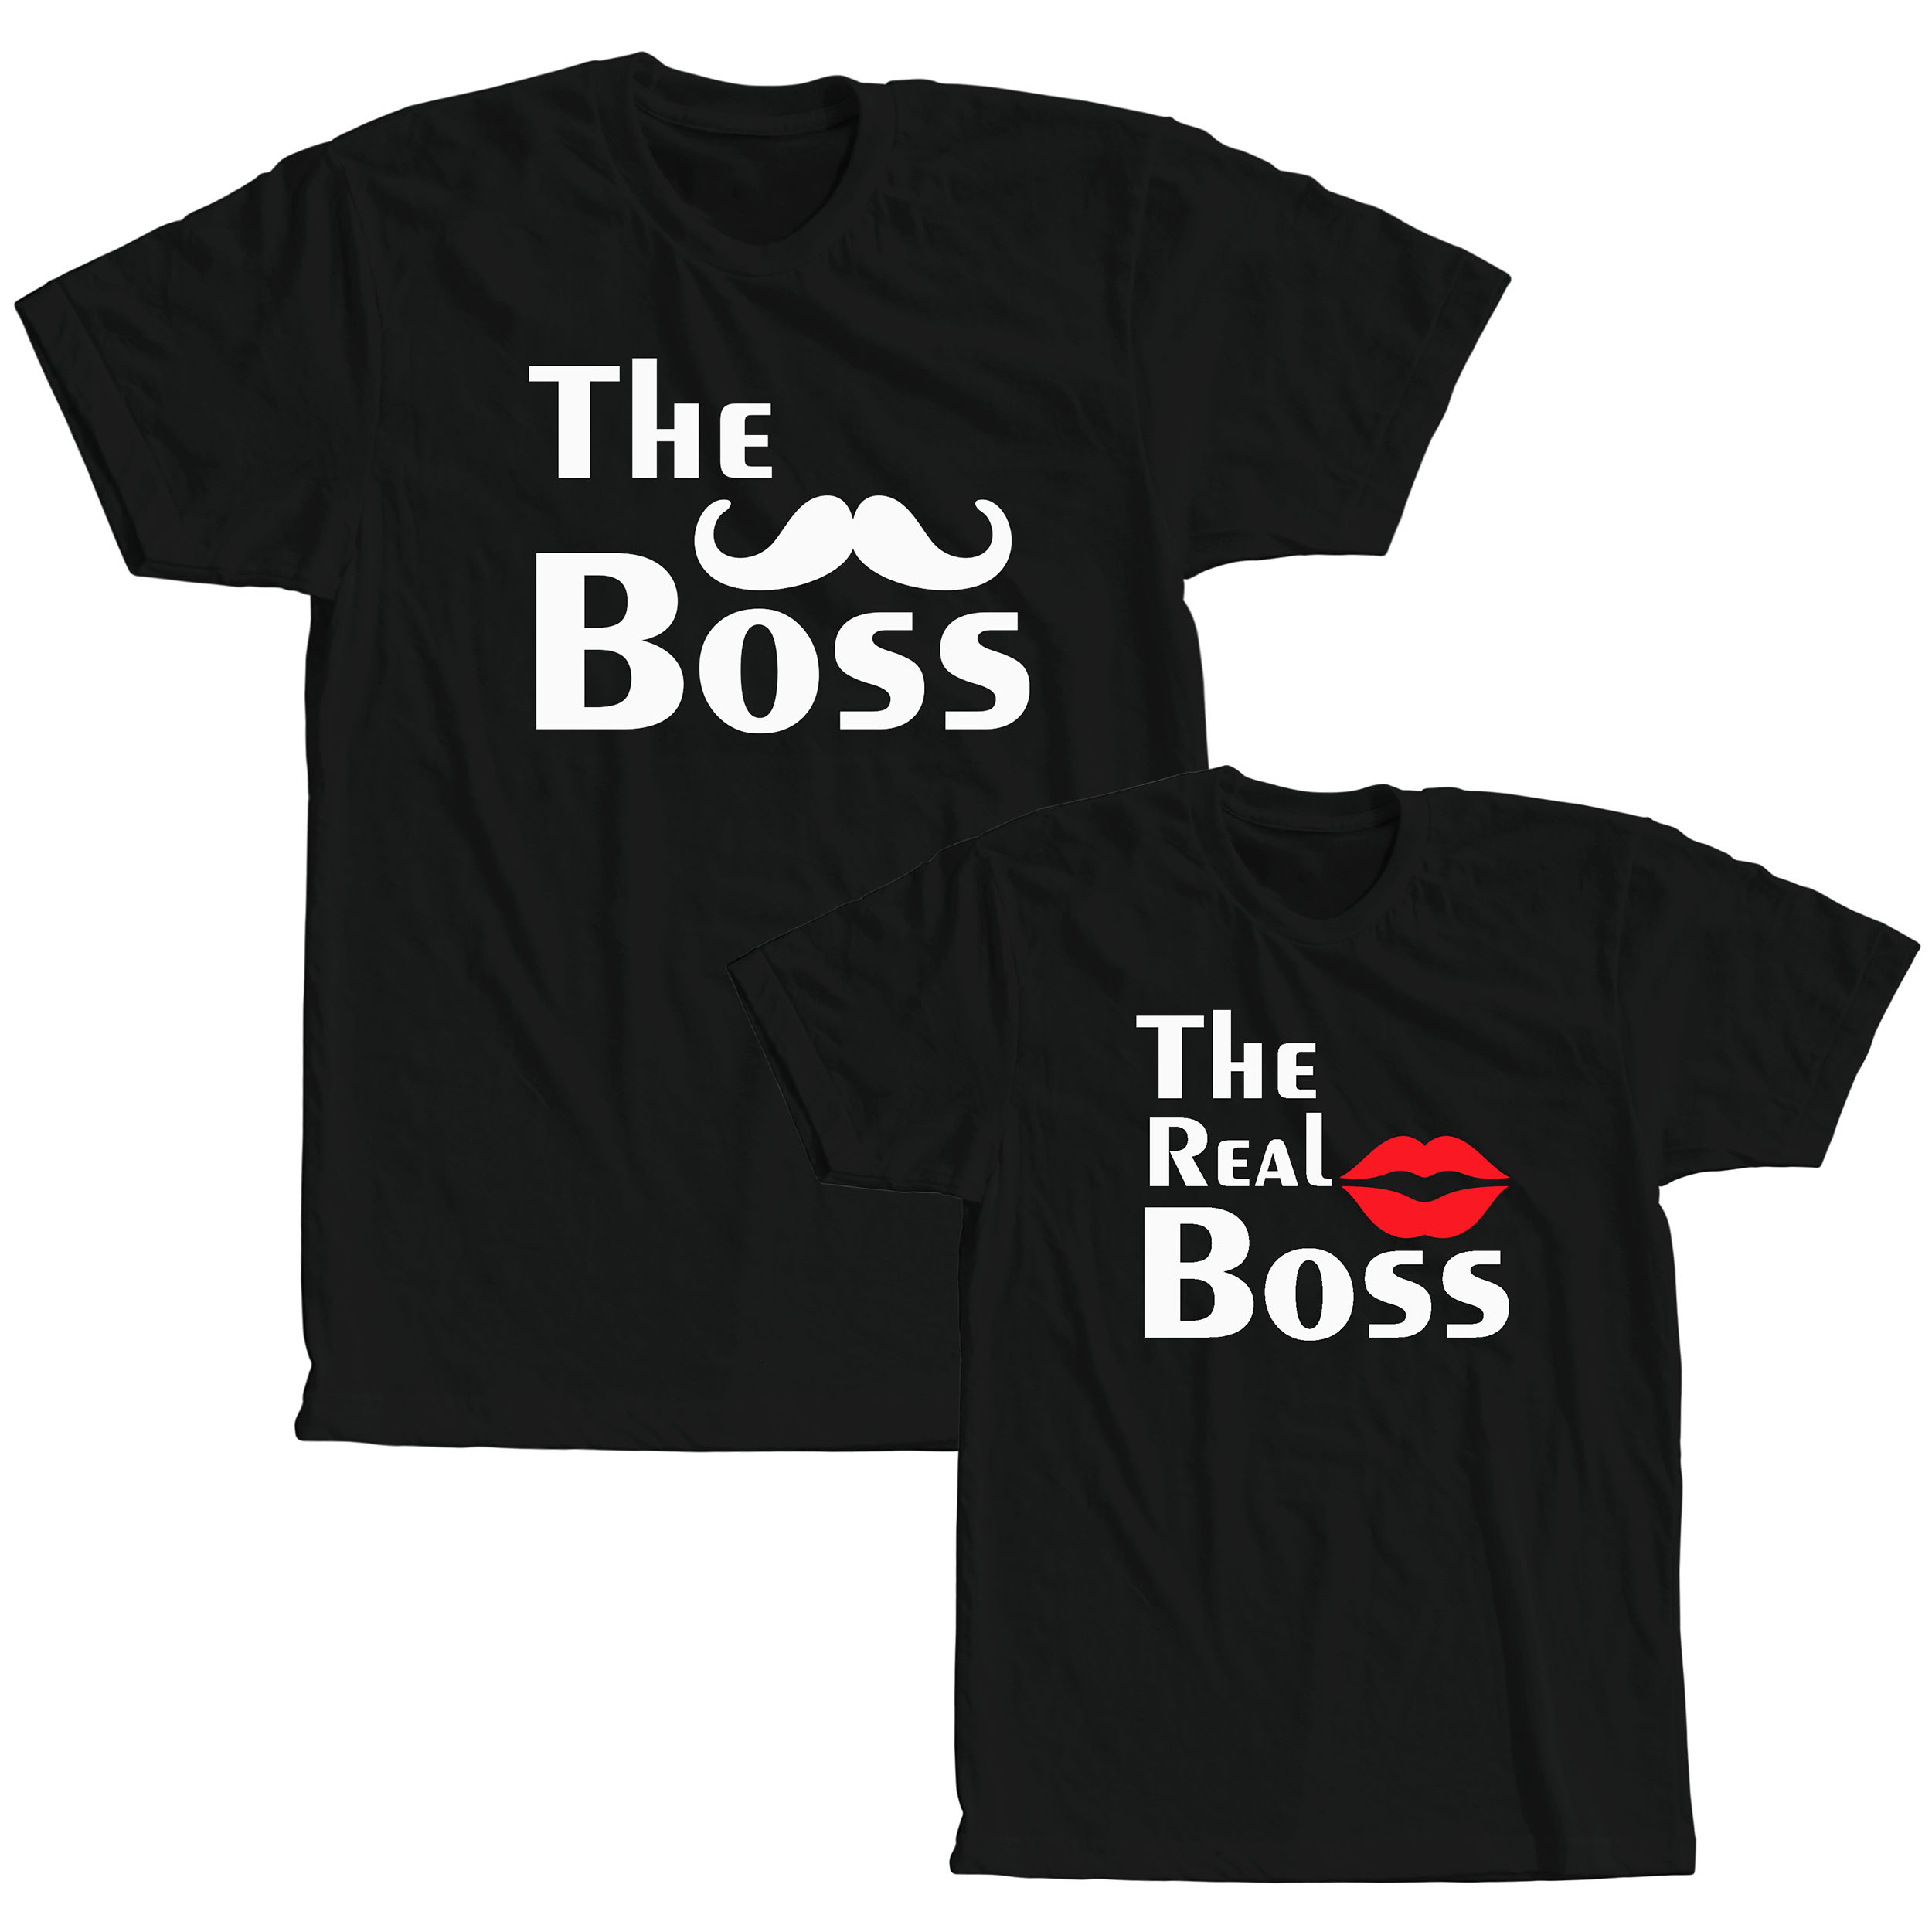 boss and real boss t shirts